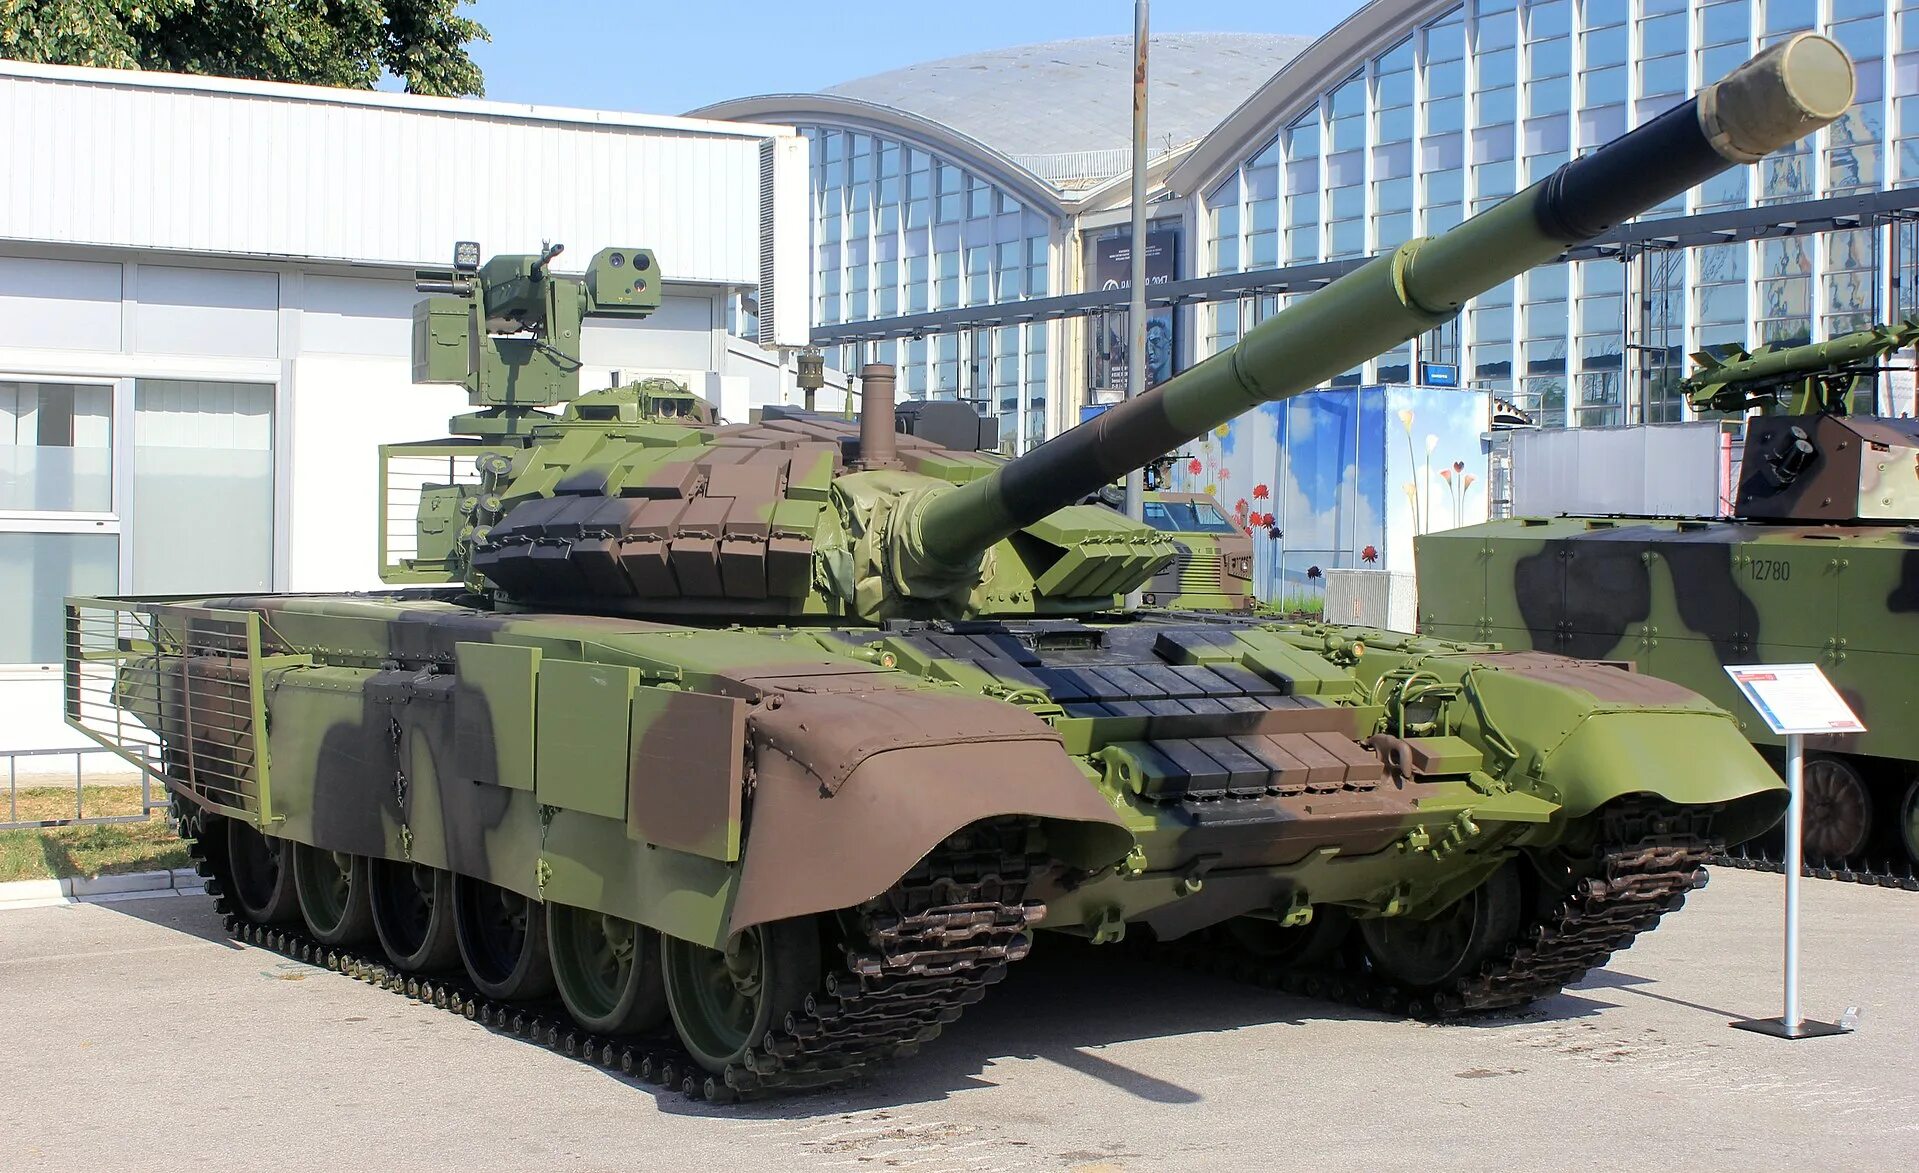 Сербский танк м84 АС 1. Танк Сербии м84ас-1. M-84 танк. Сербский танк m-84.